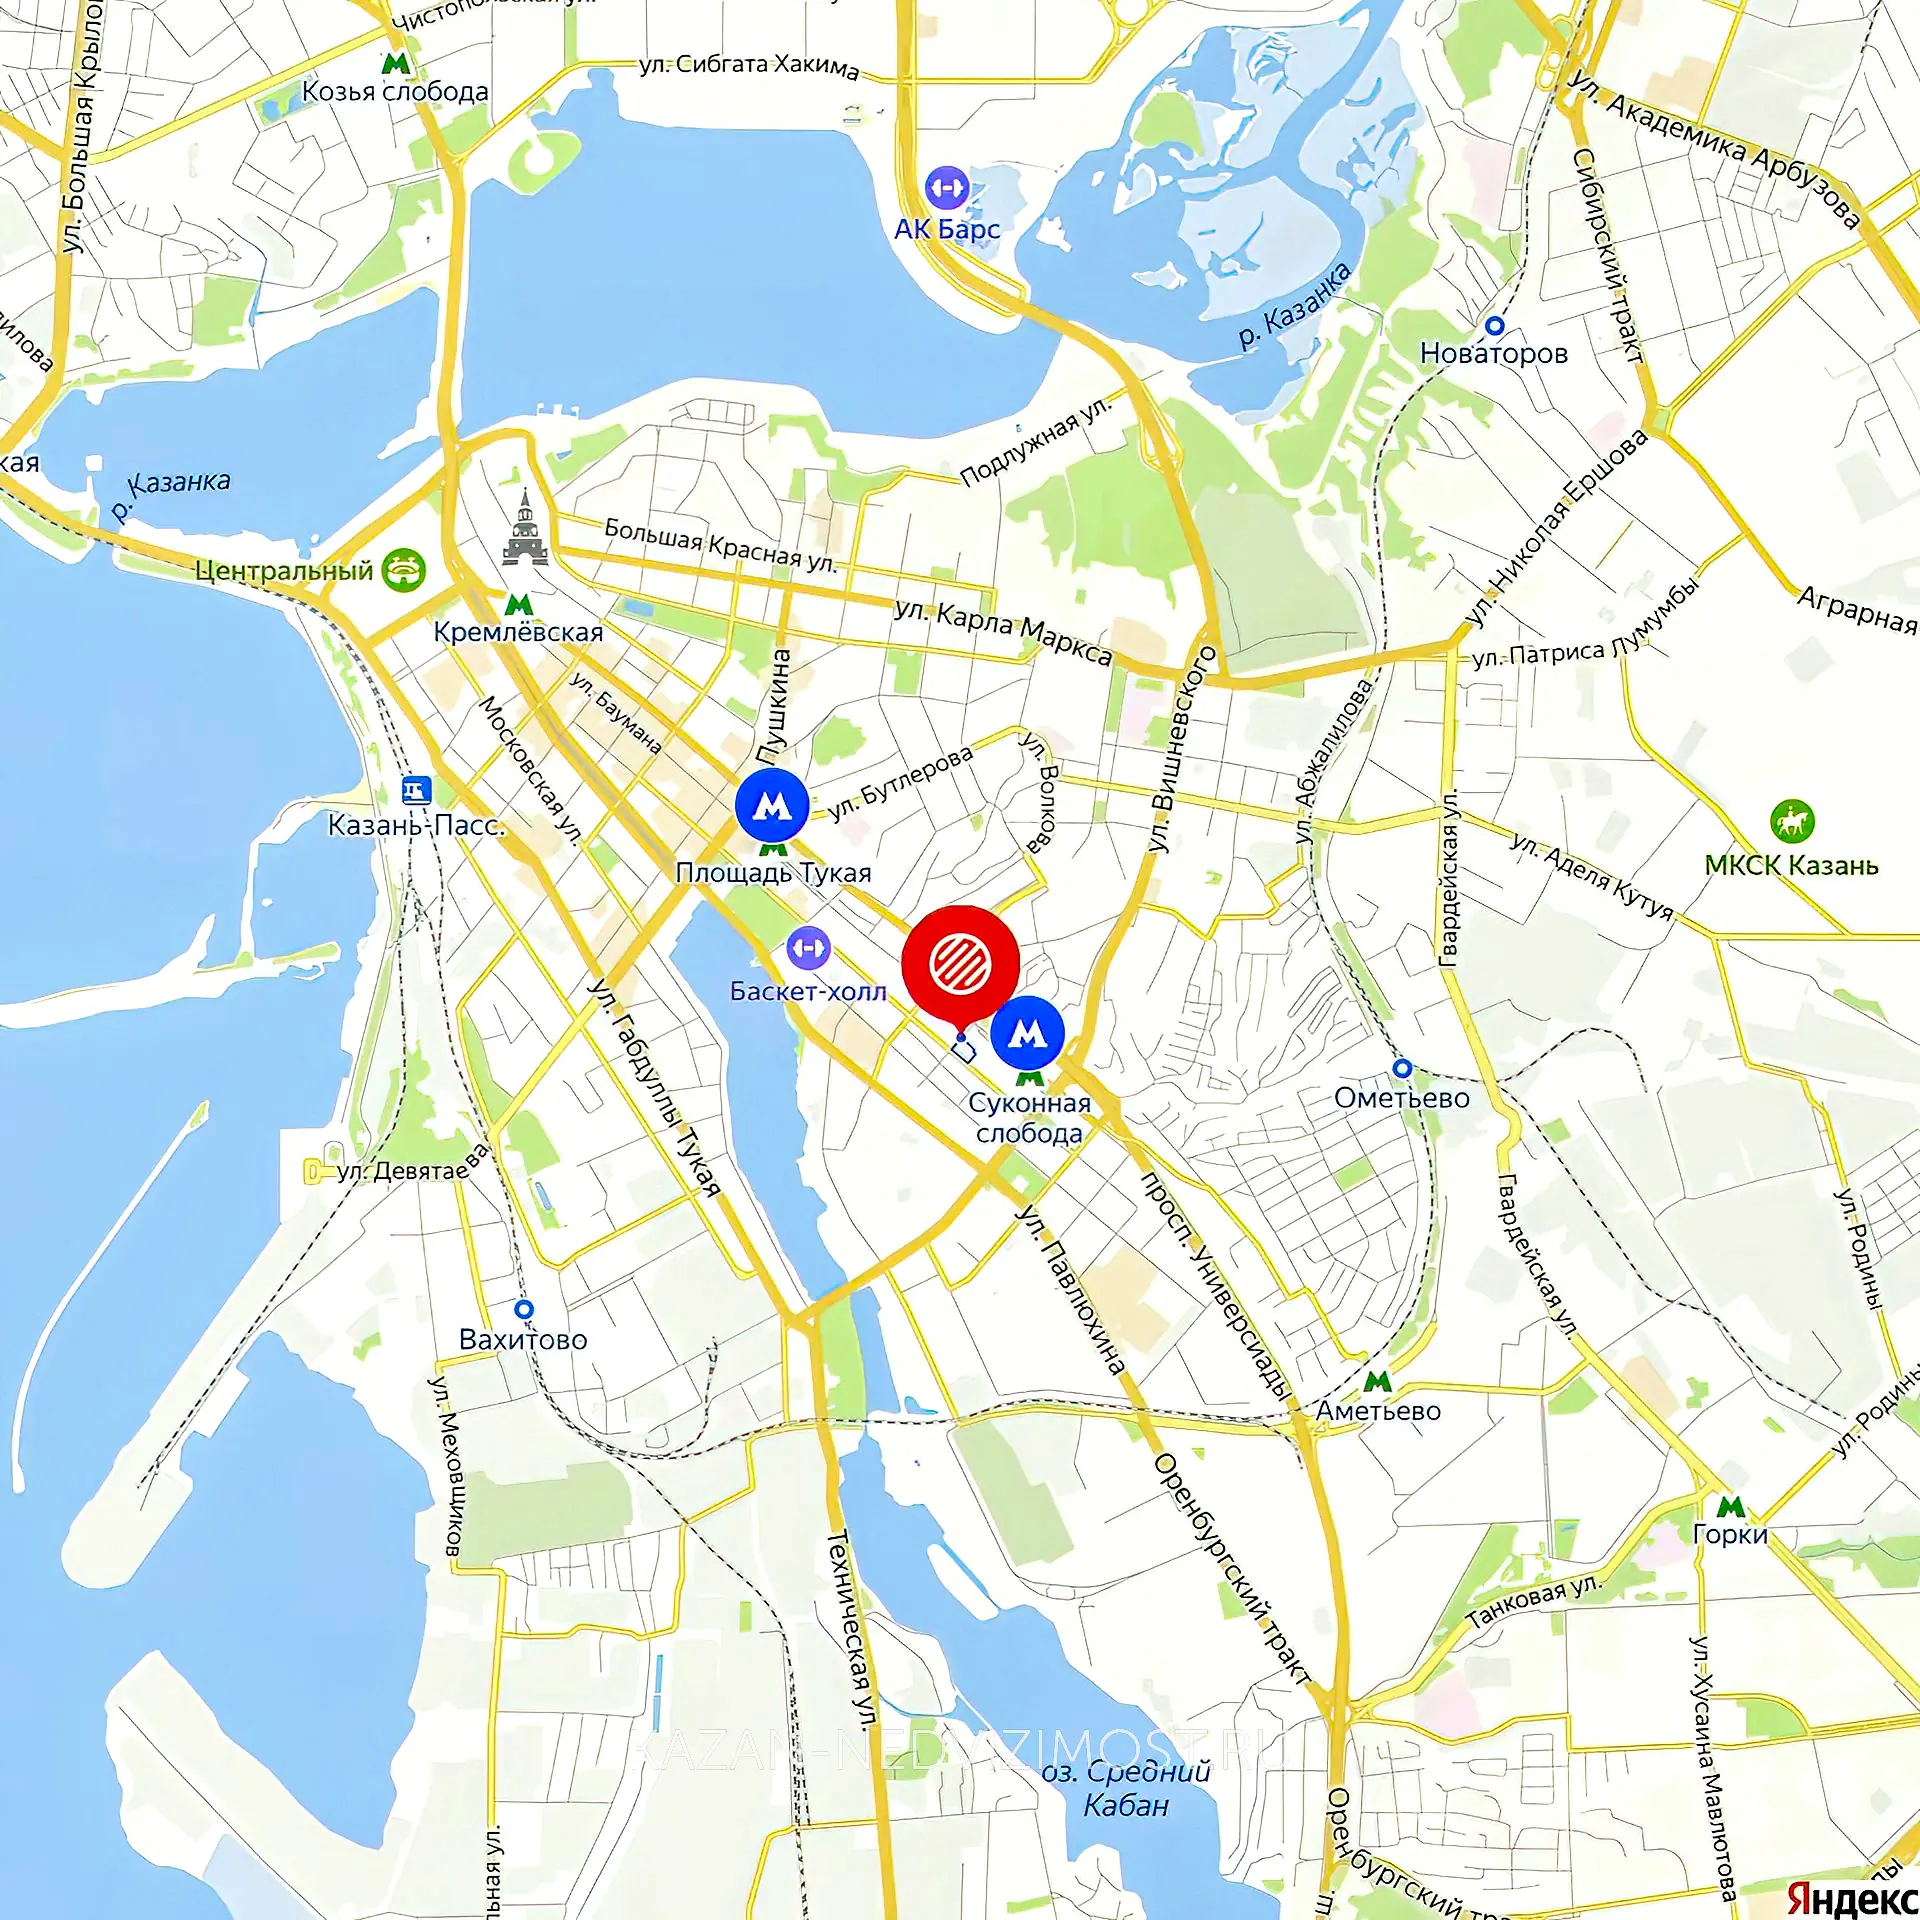 Расположение и маршрут на карте от ЖК Август Астры до центра города